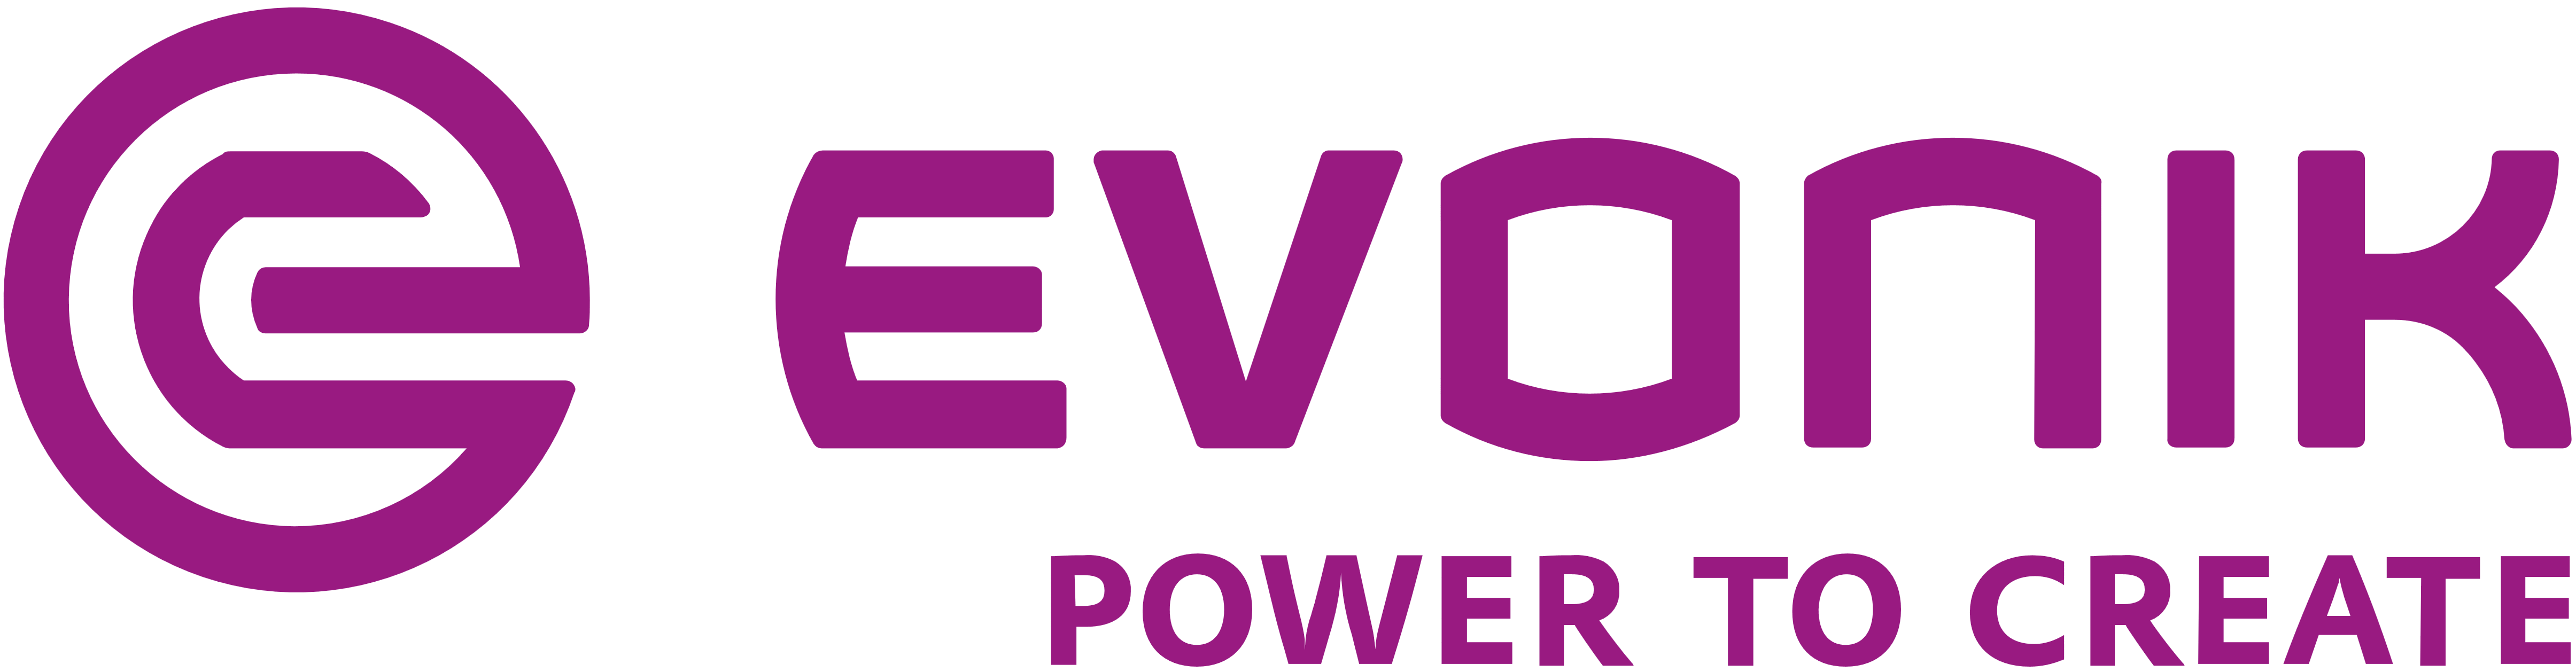 evonik logo png